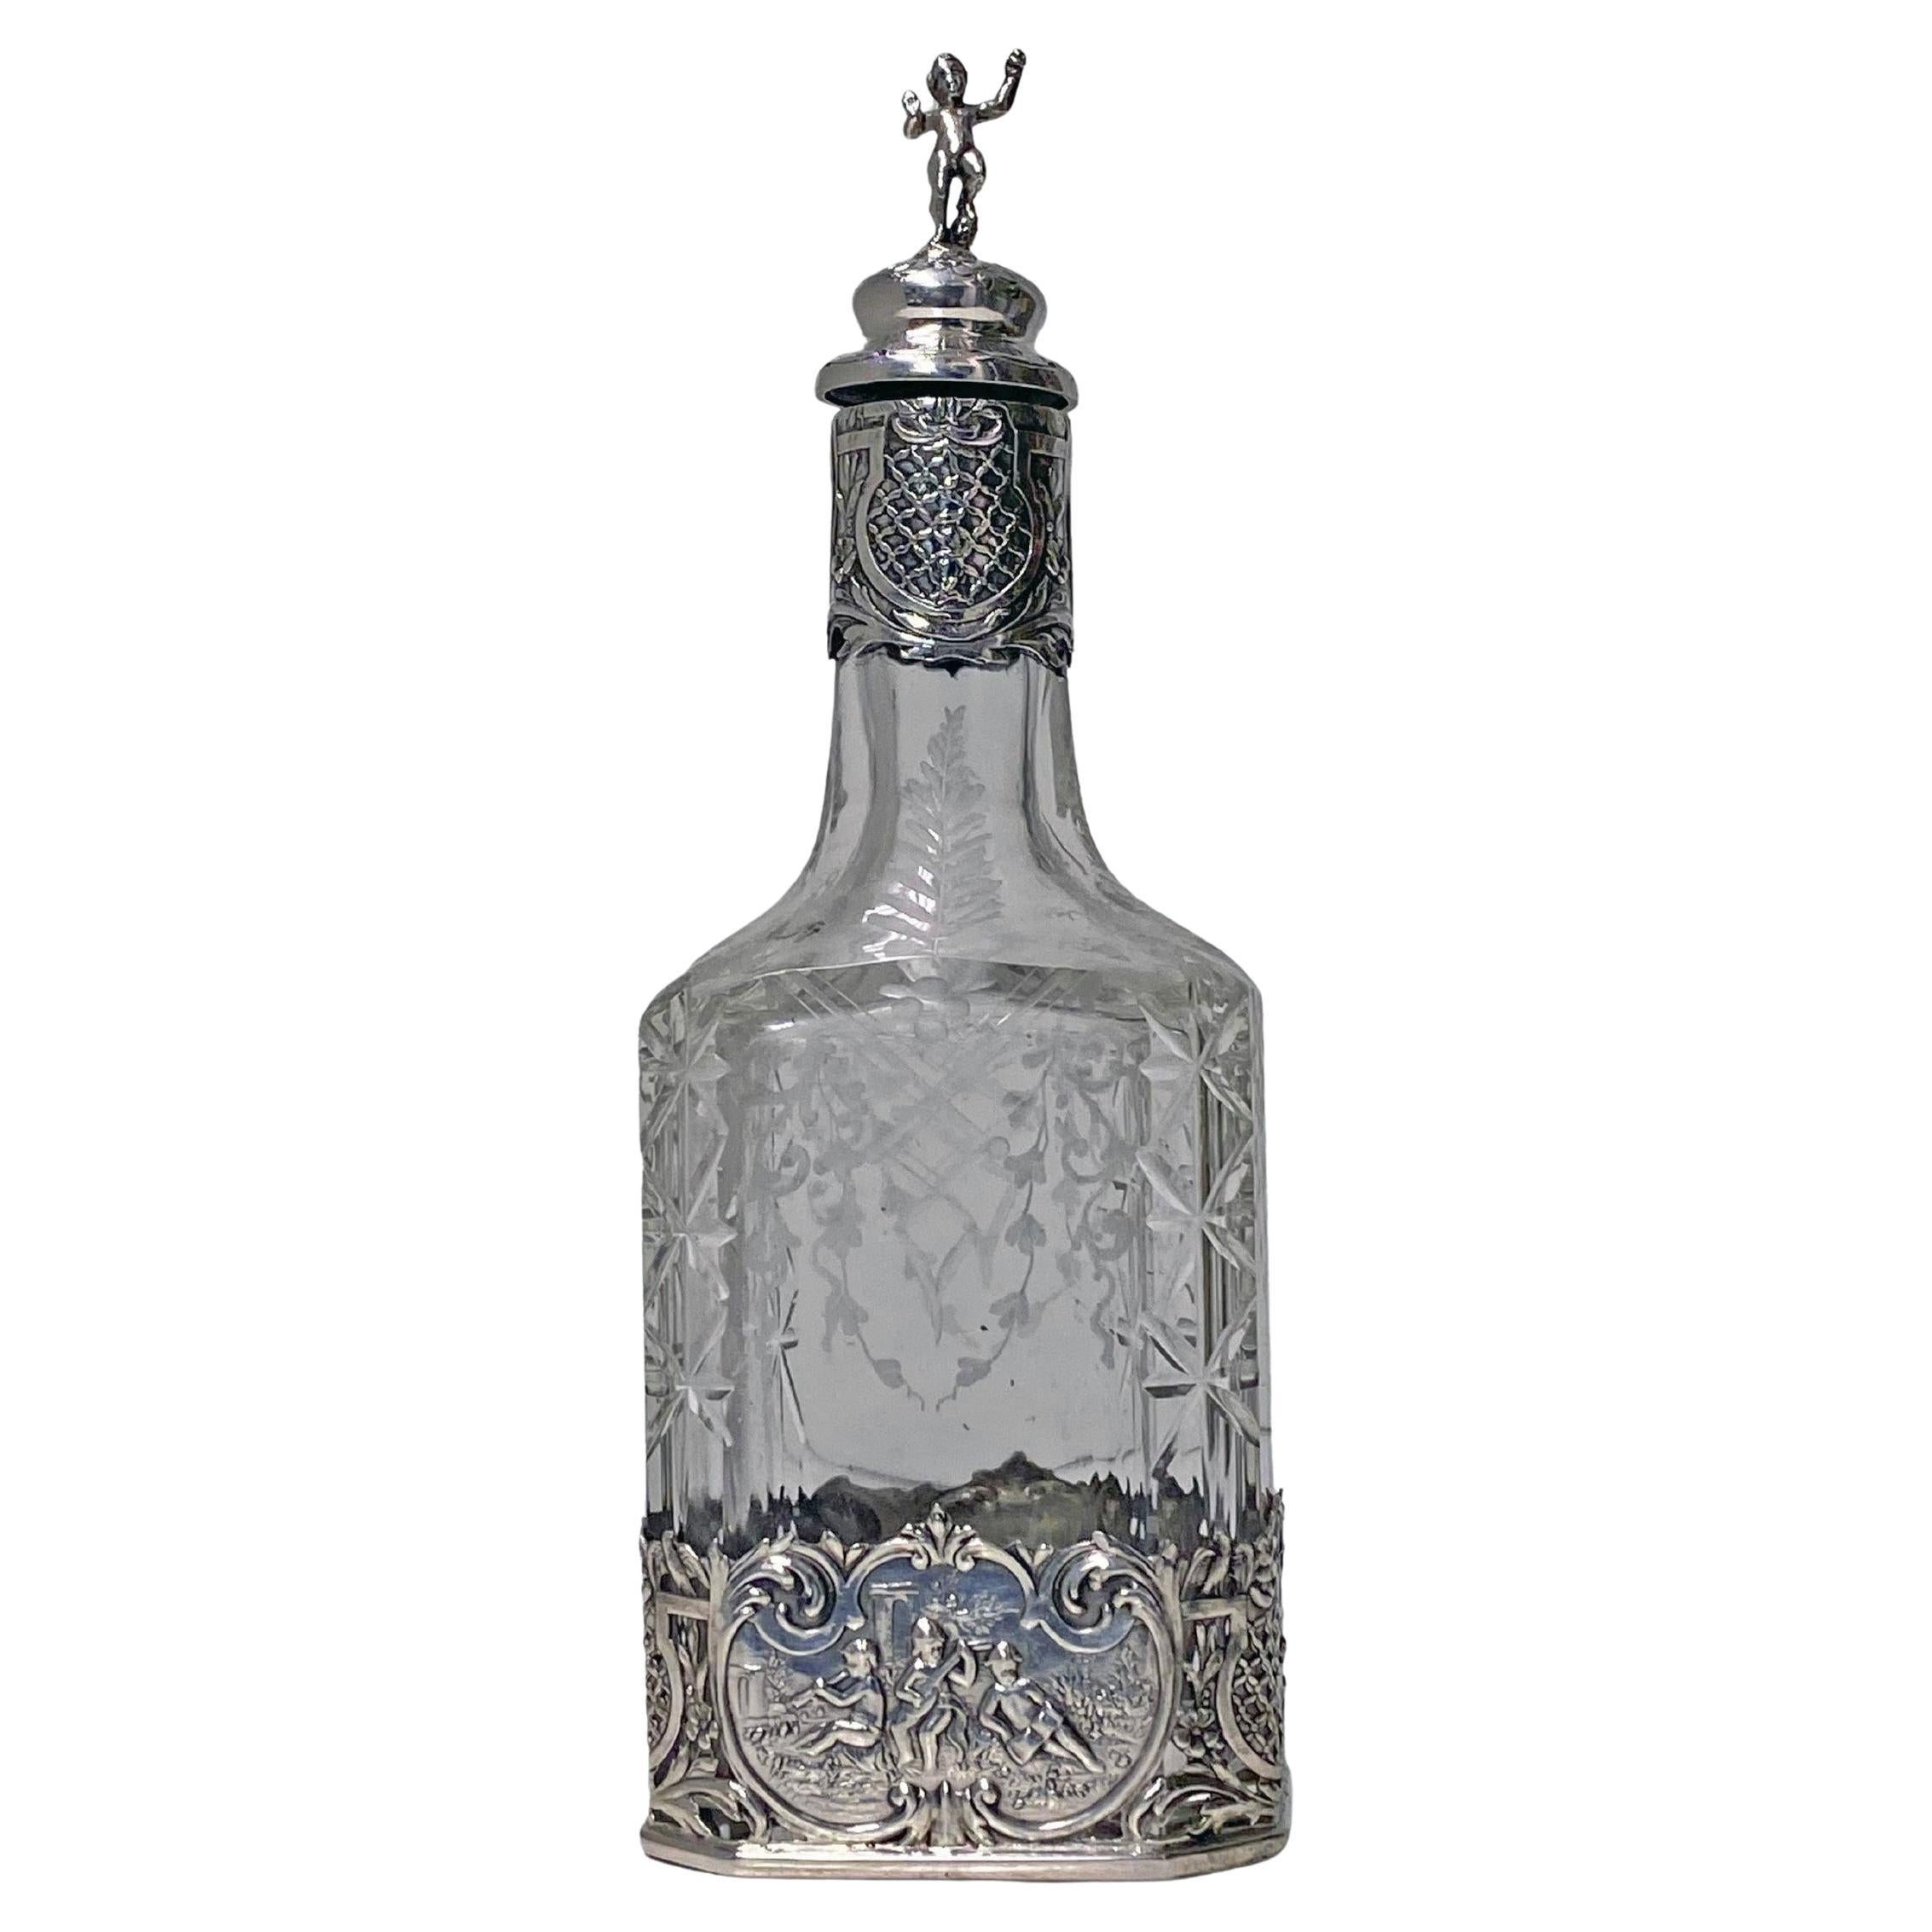 Silver and Glass Decanter for Oil Vinegar Hanau circa 1890 Storck and Sinsheimer